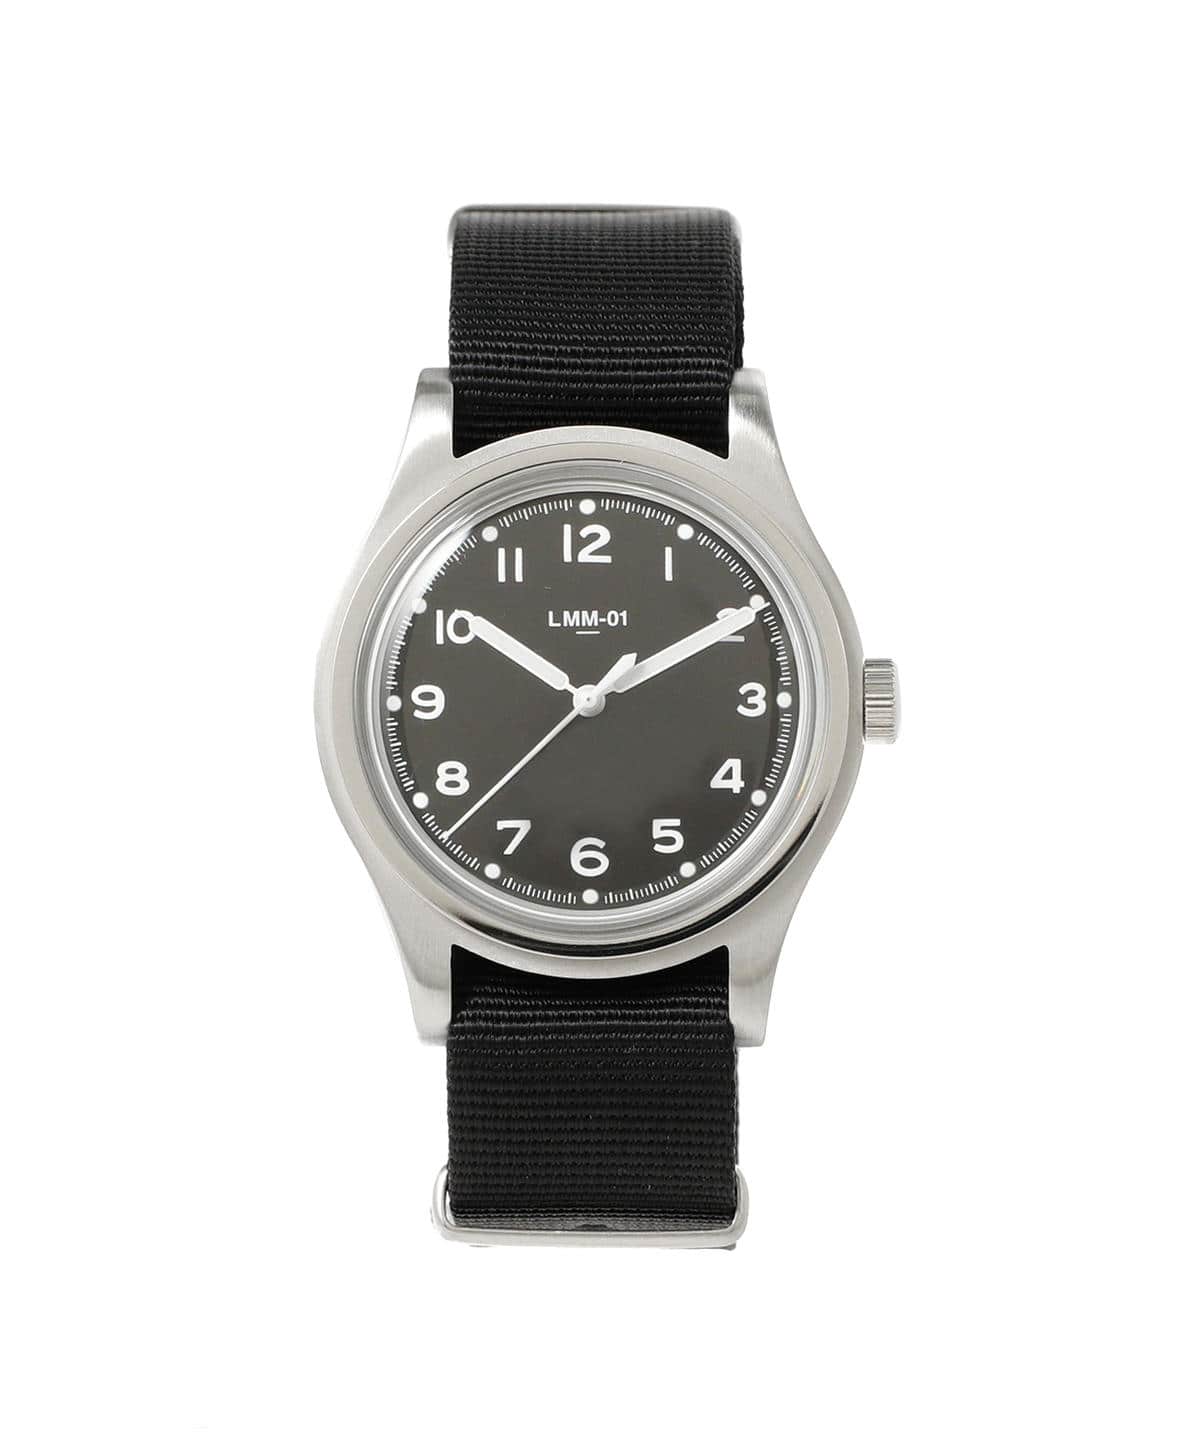 BEAMS BEAMS-01 / PROJECT SPECIAL “Field Watch” 3-hand watch (watch